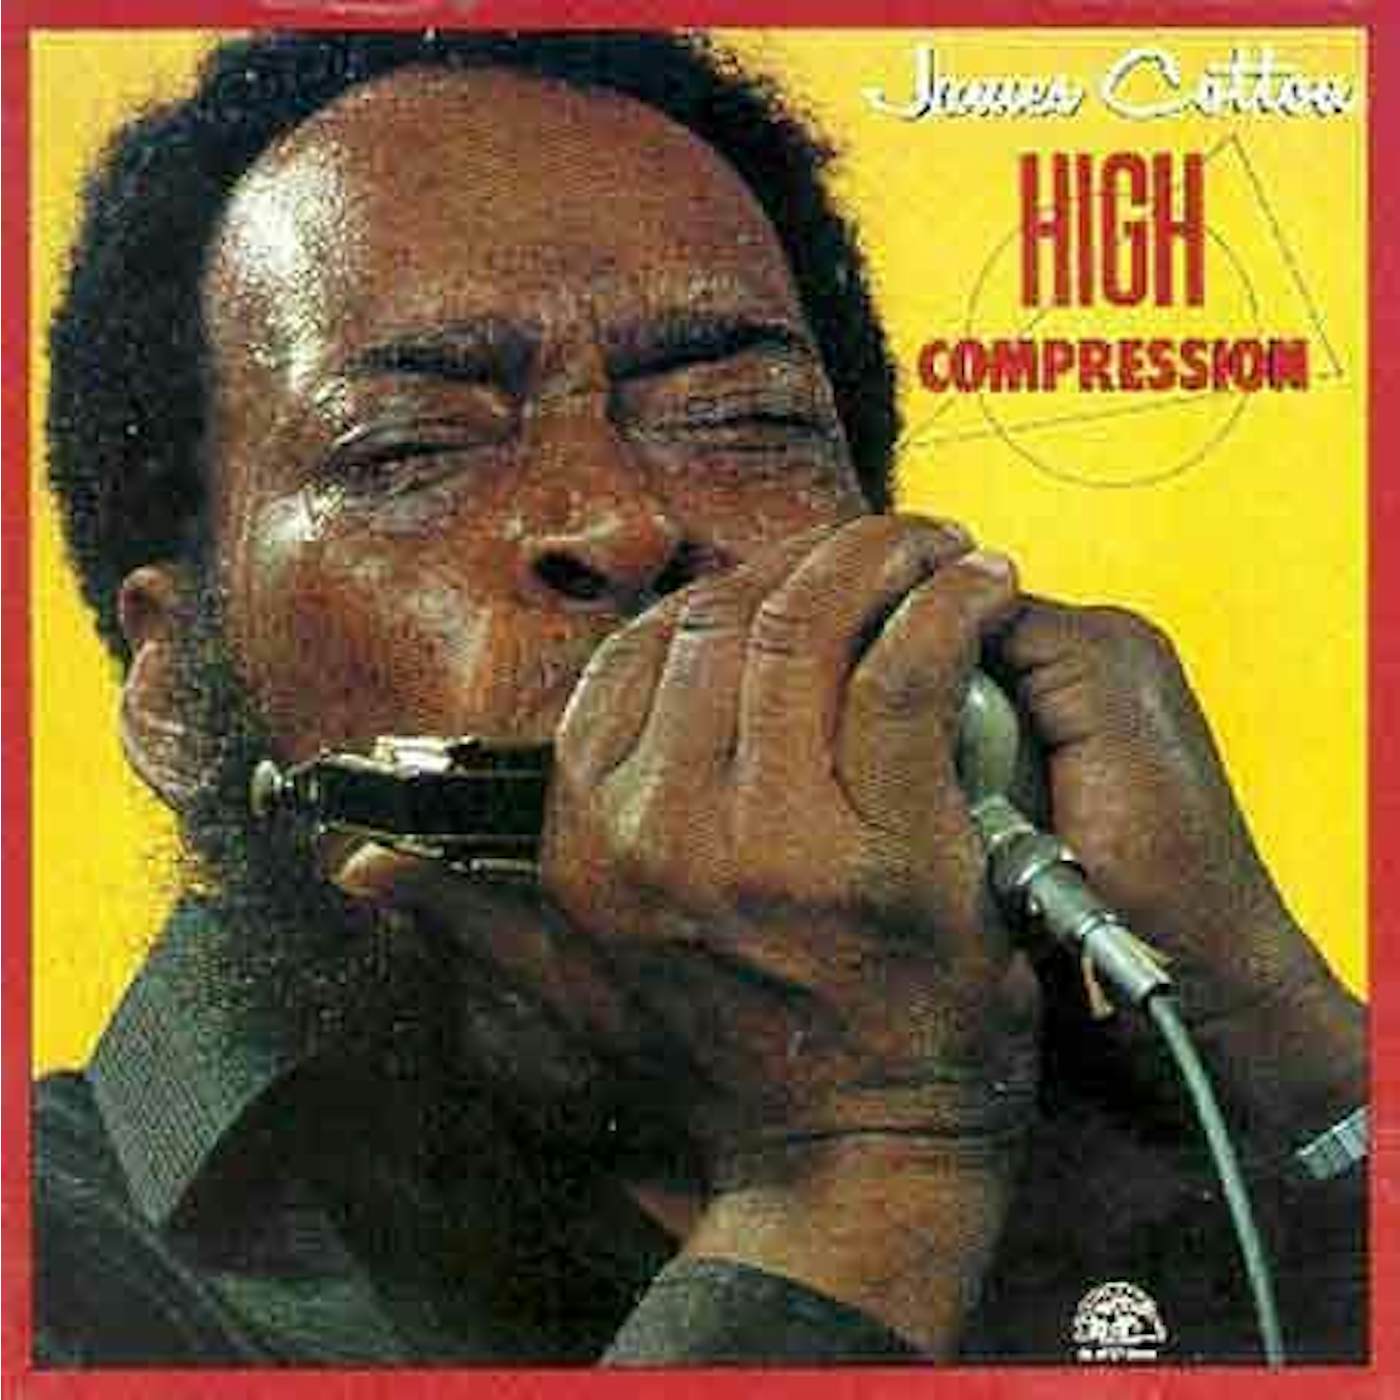 James Cotton HIGH COMPRESSION CD